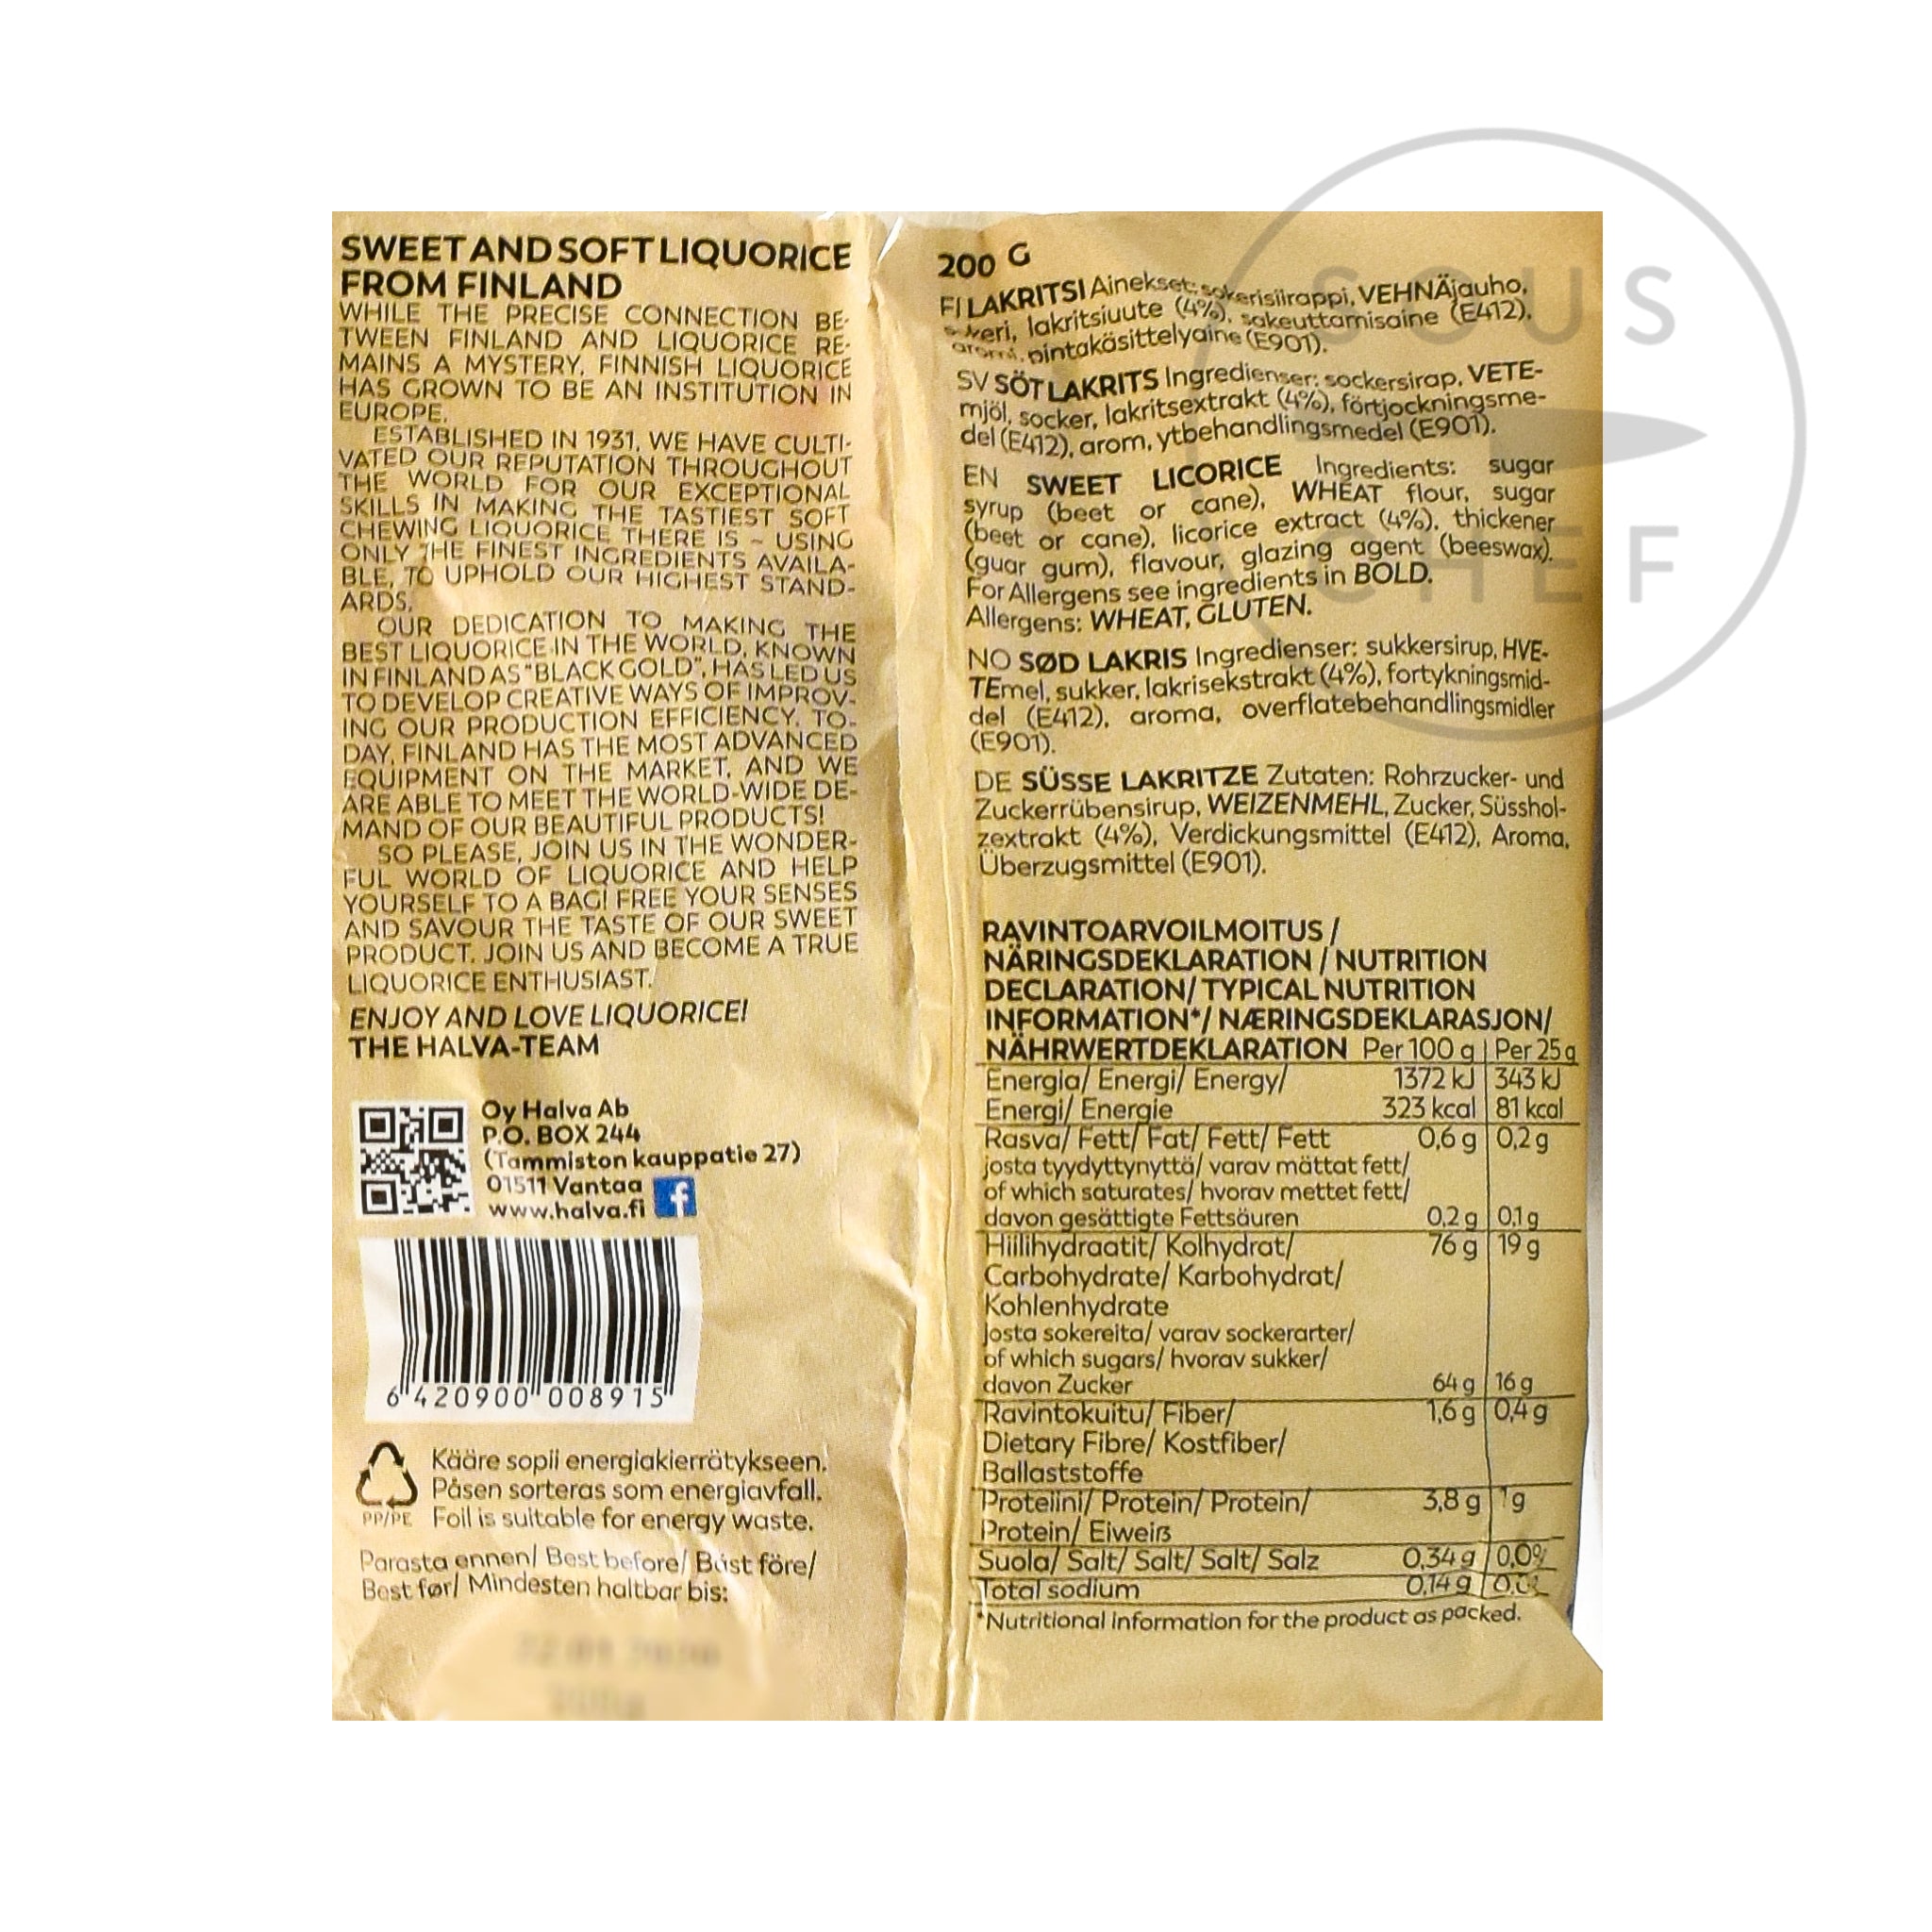 Halva Finnish Soft Eating Licorice Bag 200g nutritional information ingredients